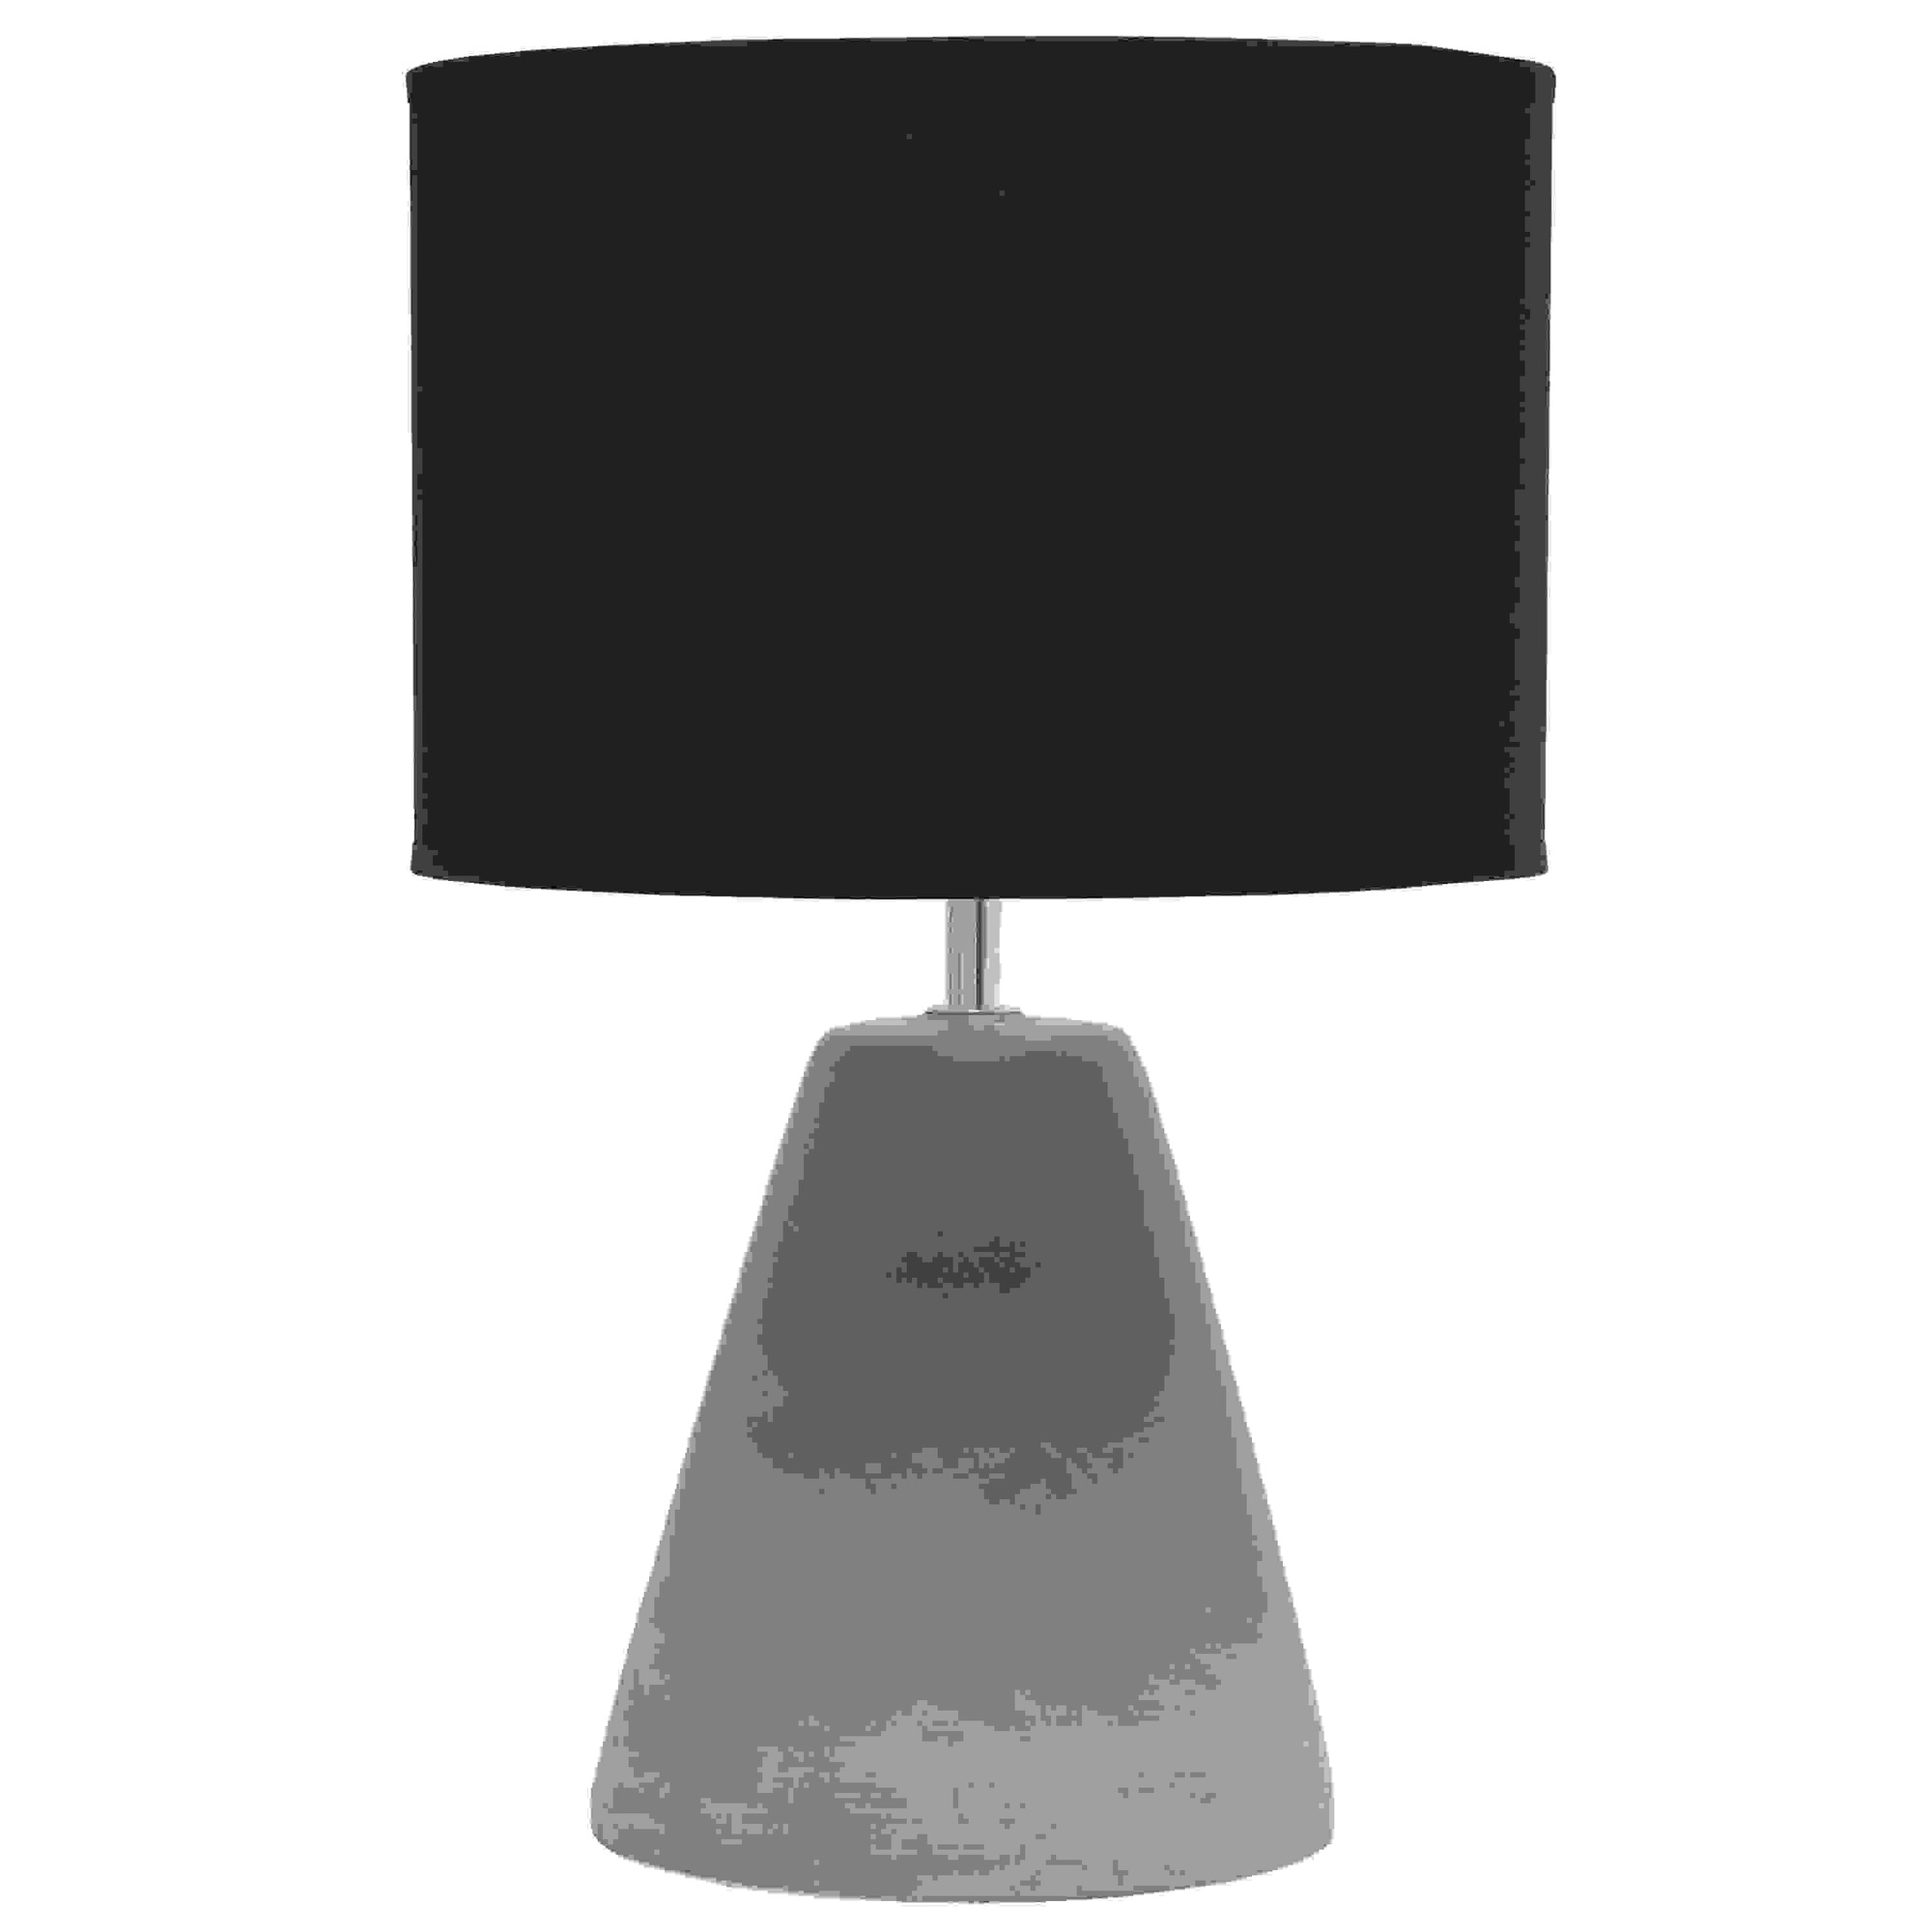 Simple Designs Pinnacle Concrete Table Lamp, Black